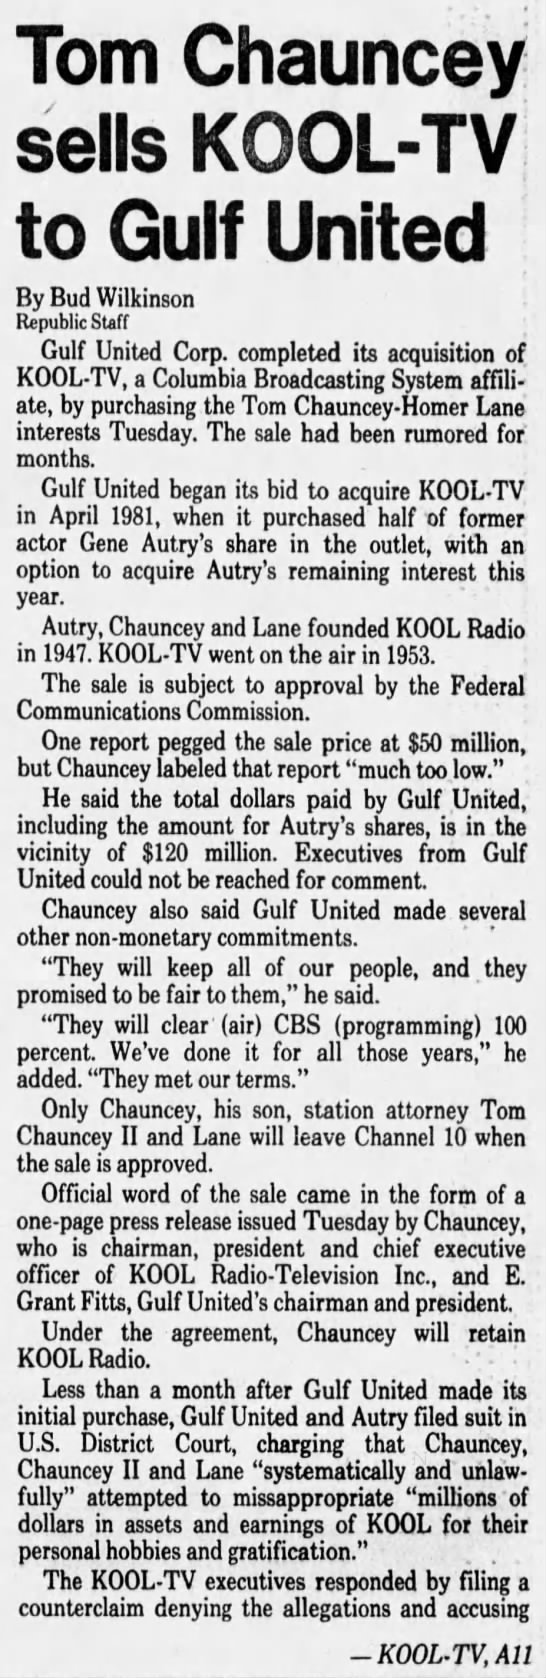 Tom Chauncey sells KOOL-TV to Gulf United - 